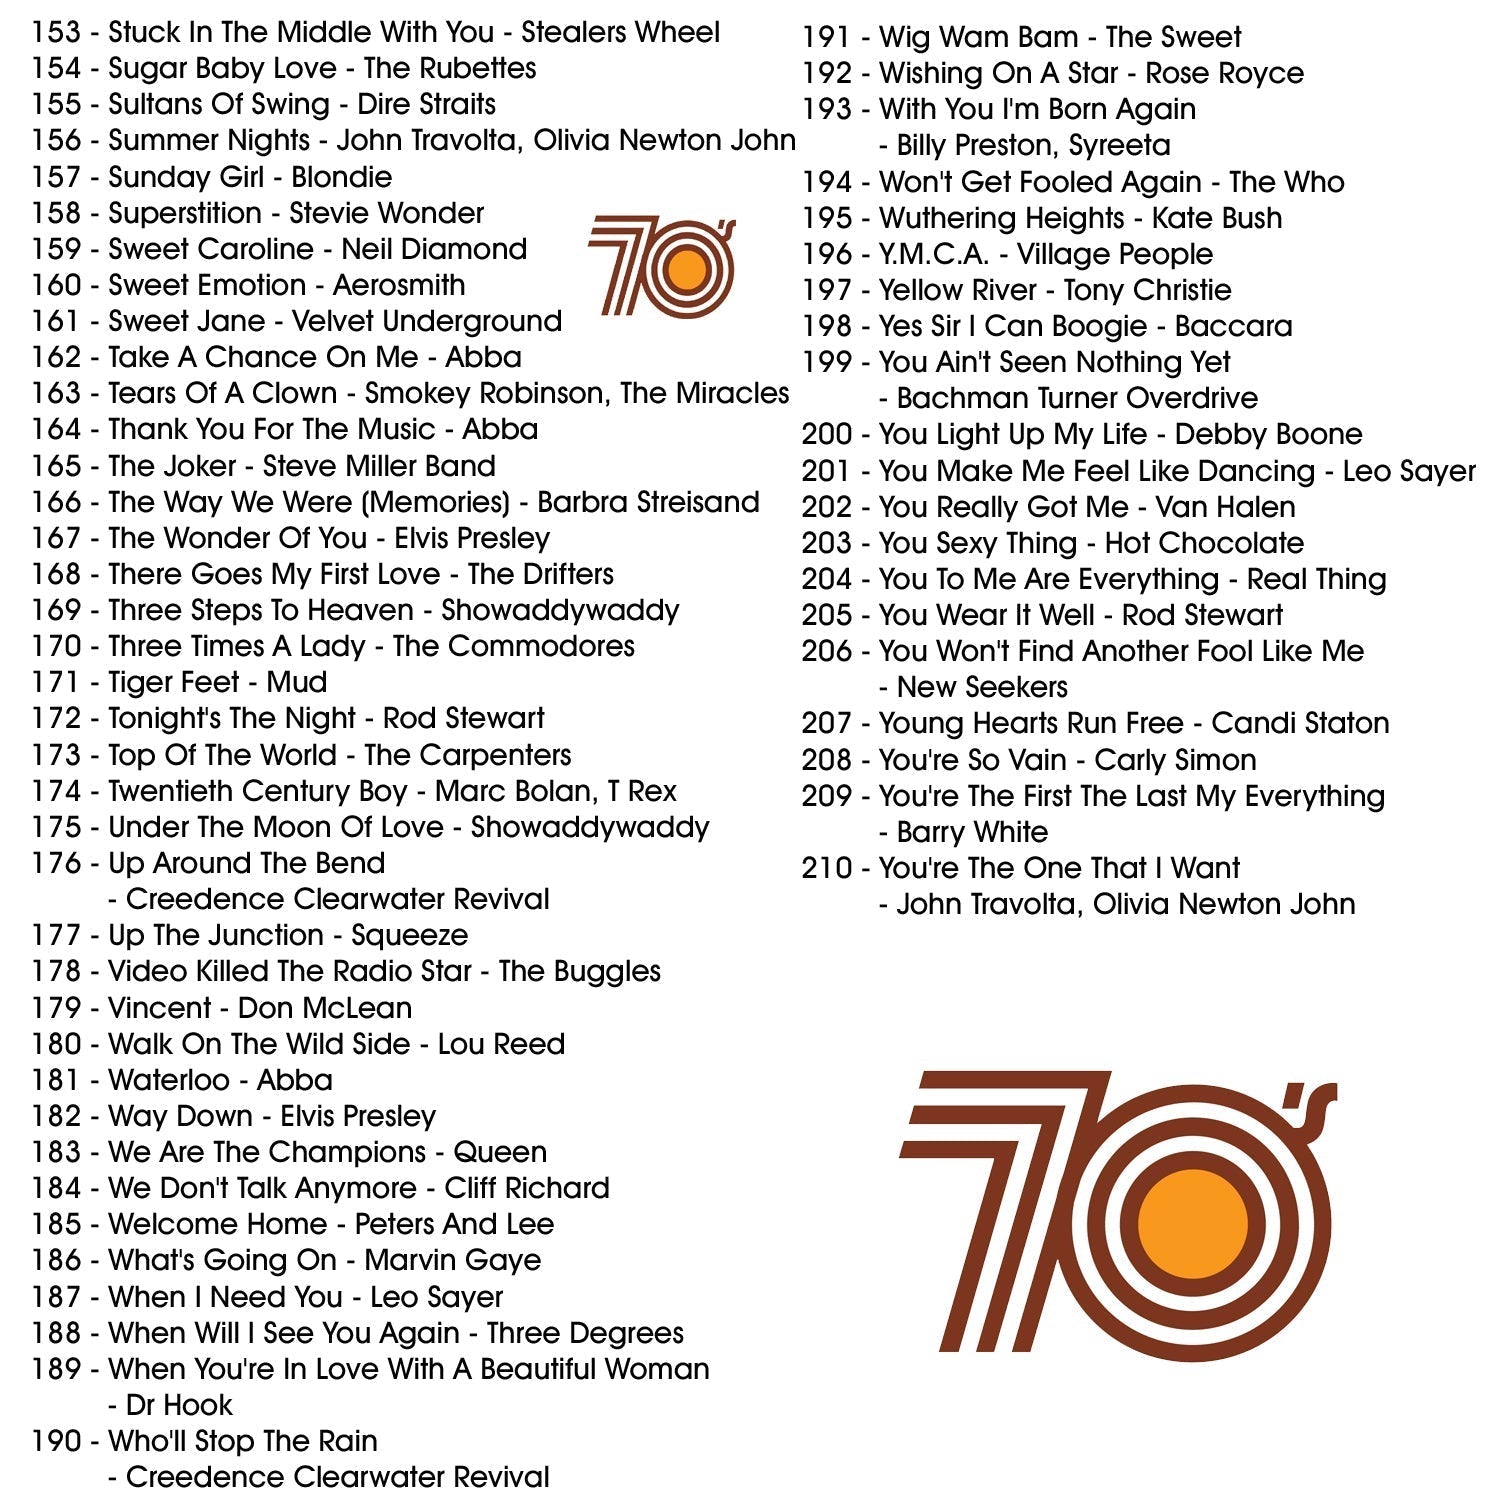 Sonken MP4000 + KBEATBOX CS-200PU + 420 Songs from the 70's & 80's - Karaoke Home Entertainment